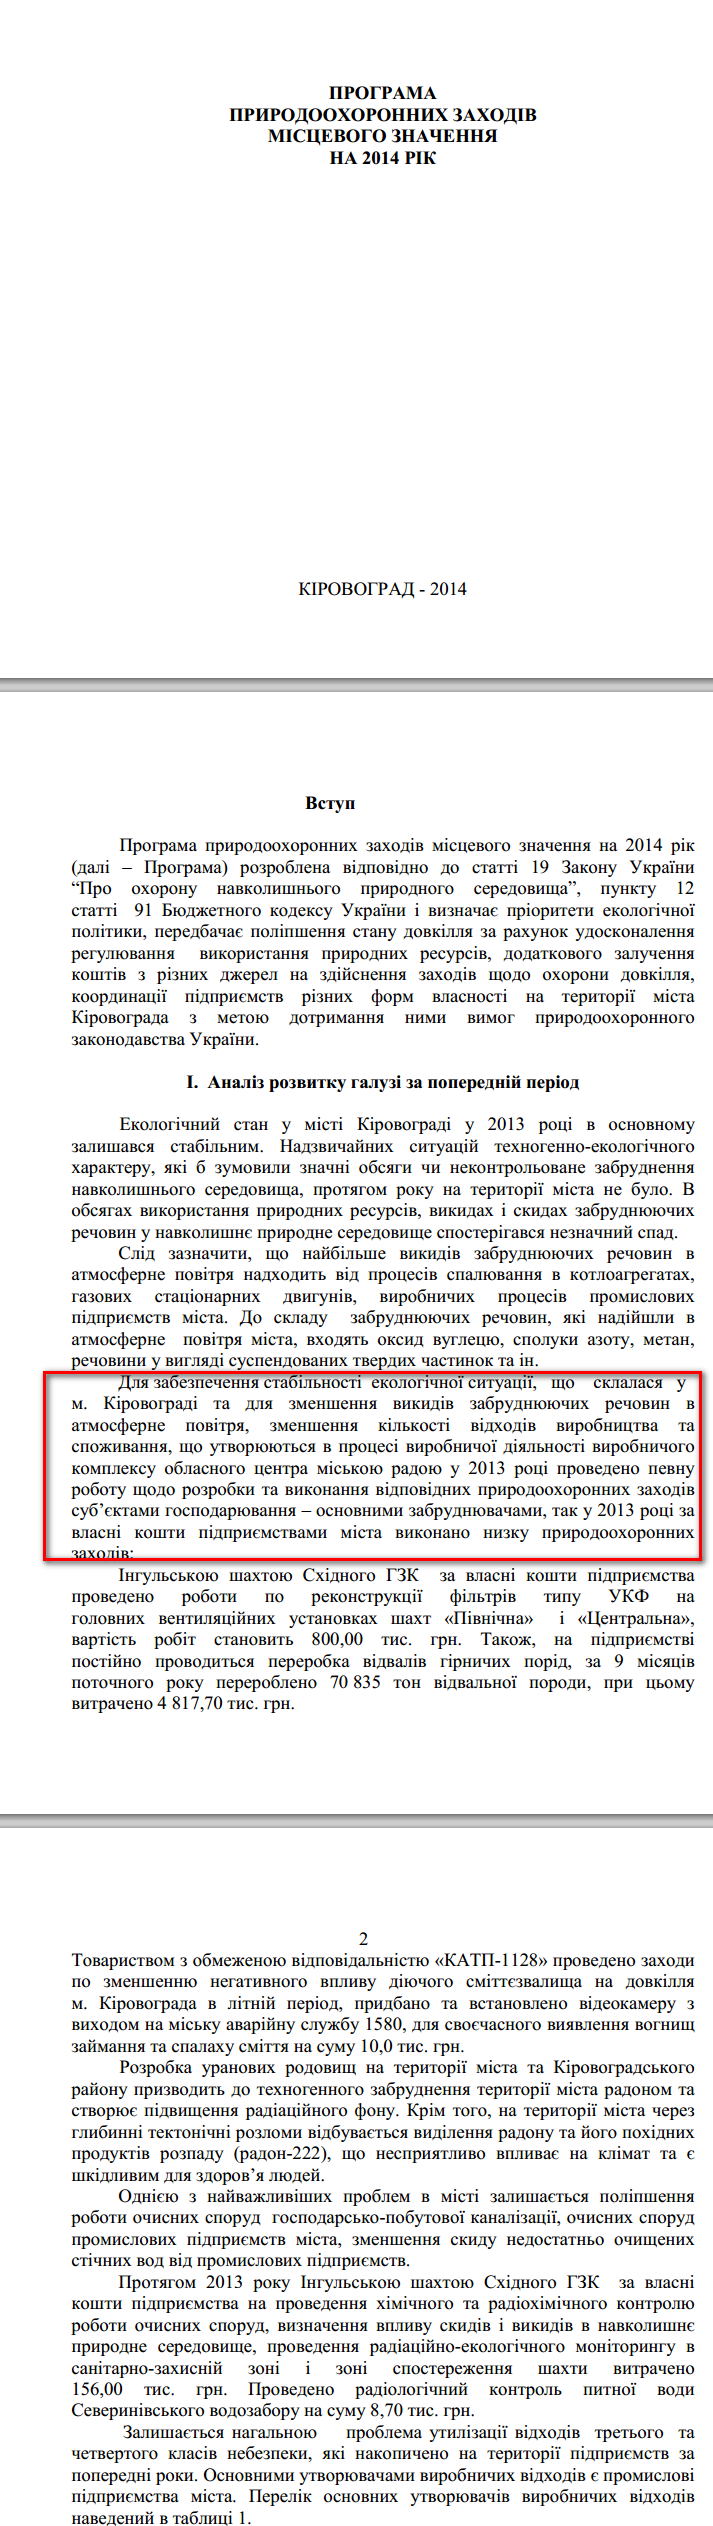 http://www.kr-rada.gov.ua/files/decision/ua-rishennya-rishenya-2775-29-01-14.pdf